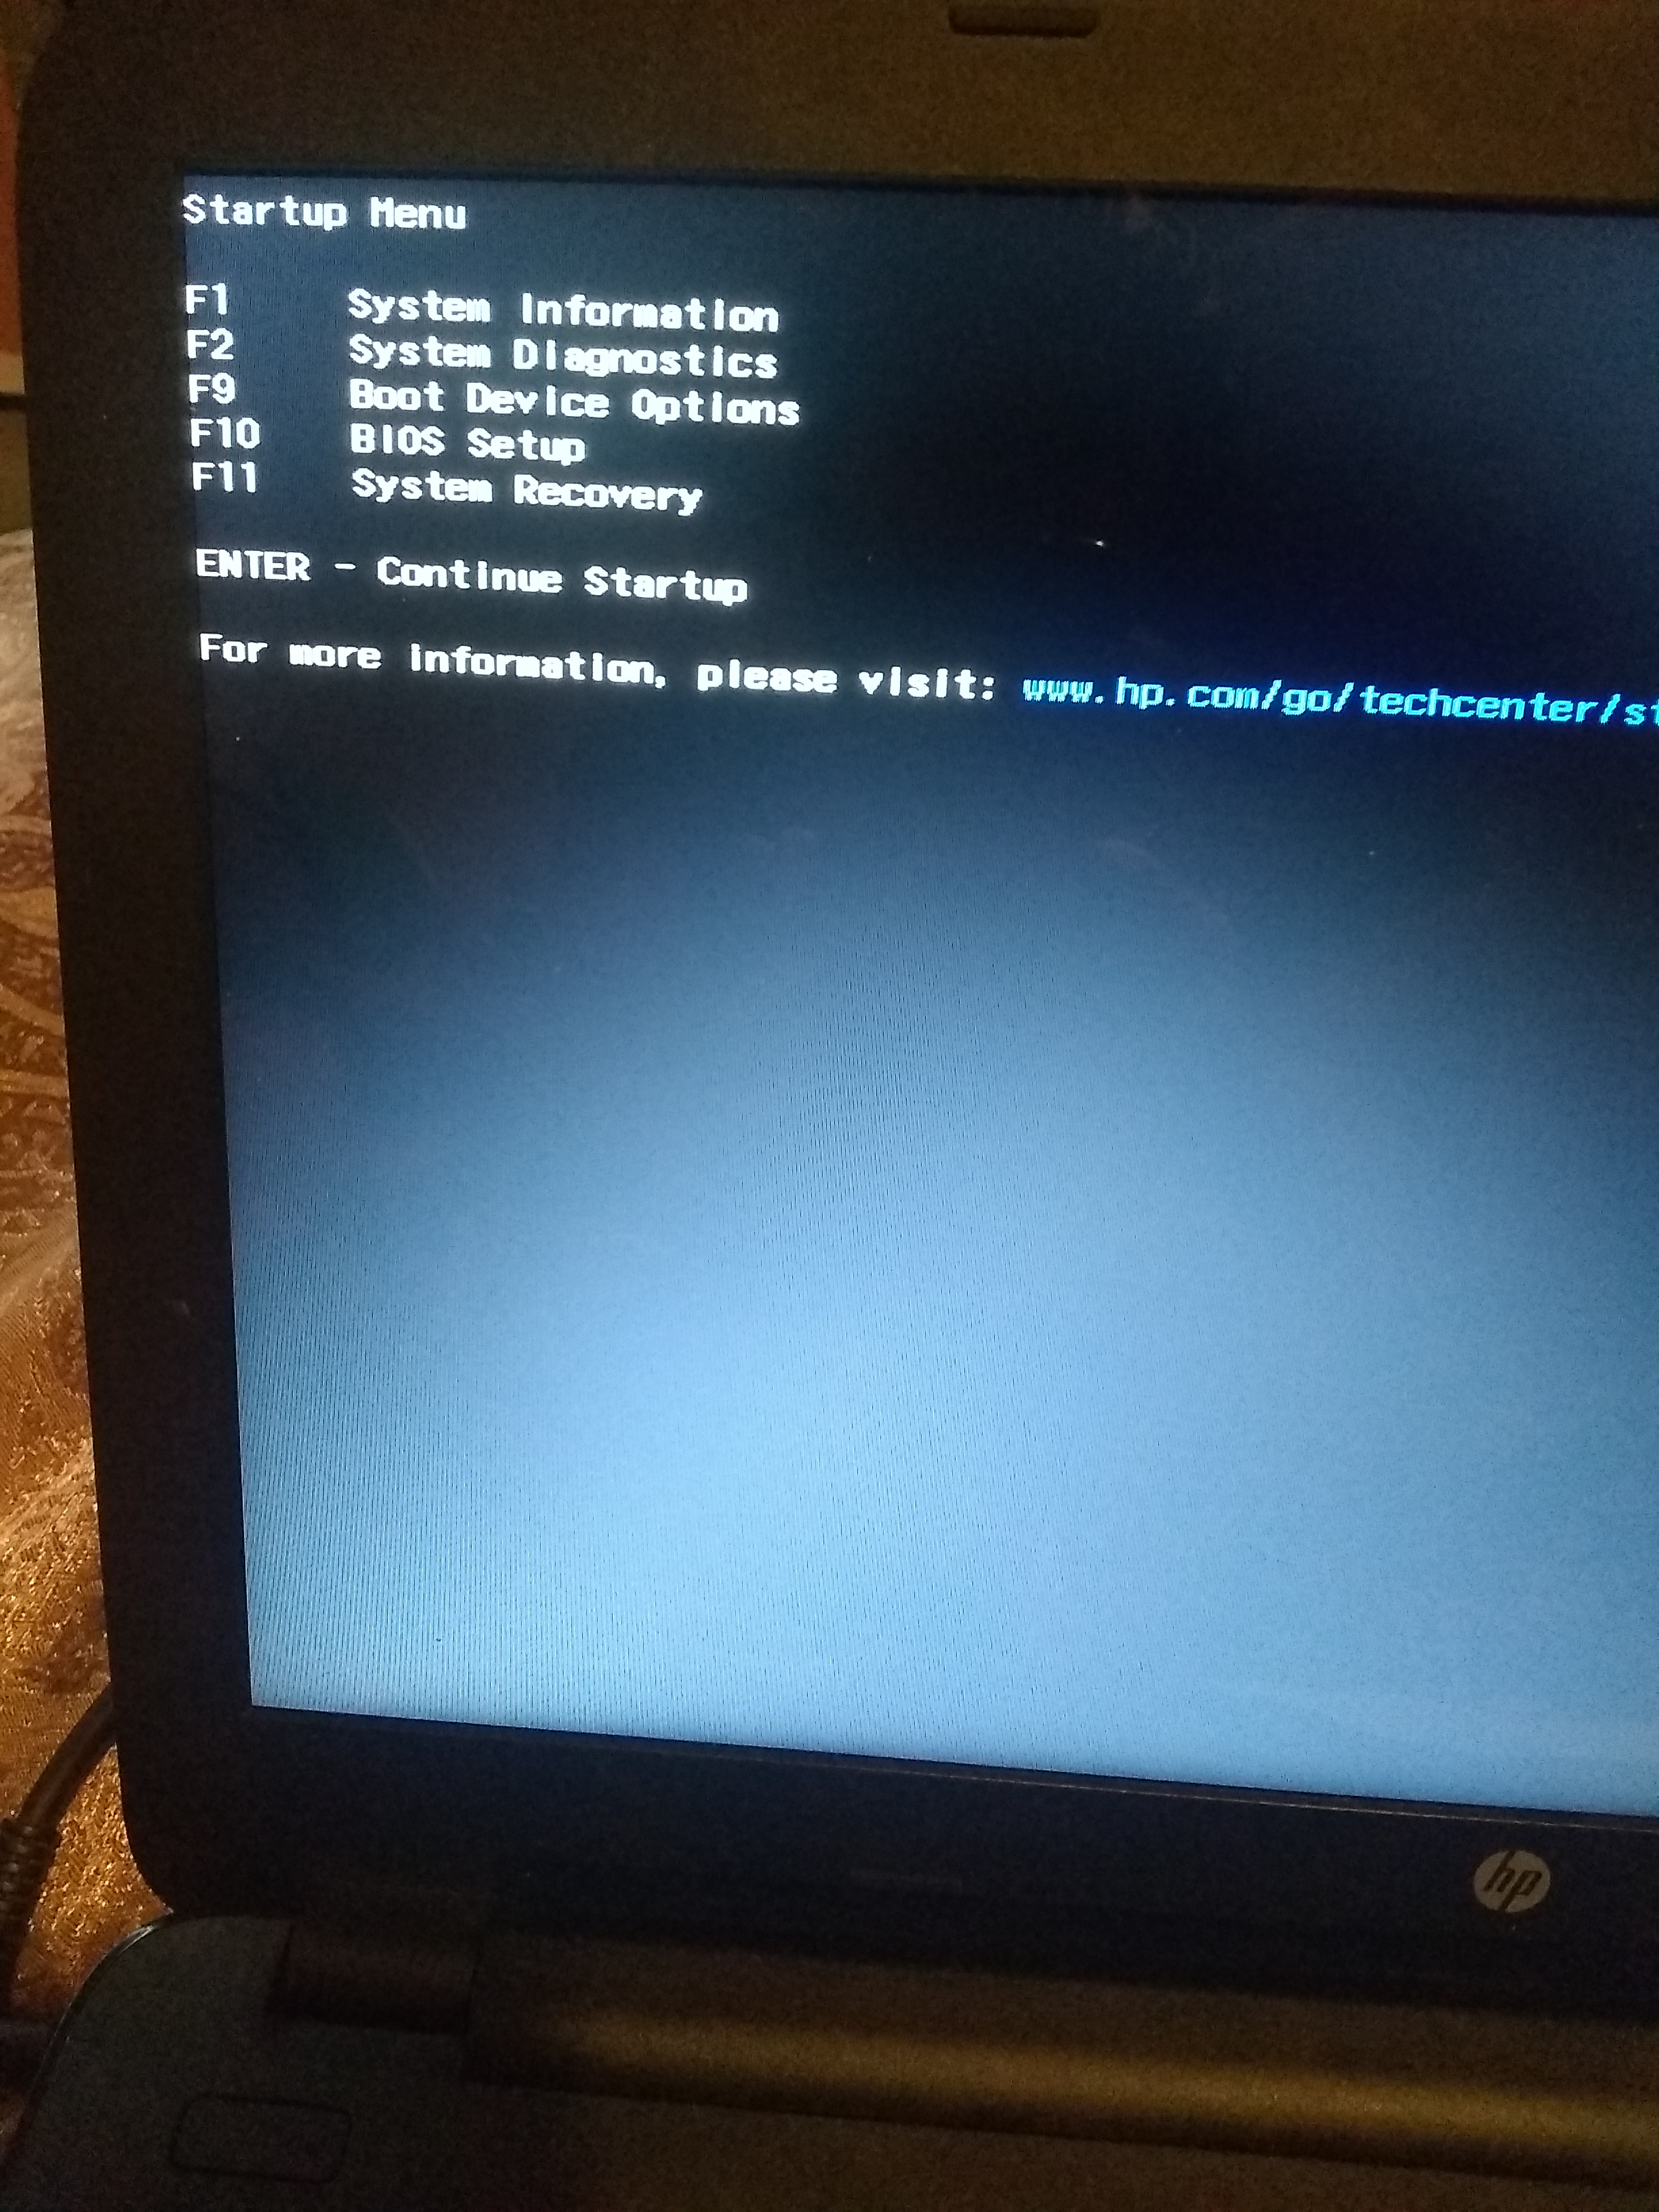 Hp laptop stuck on startup screen